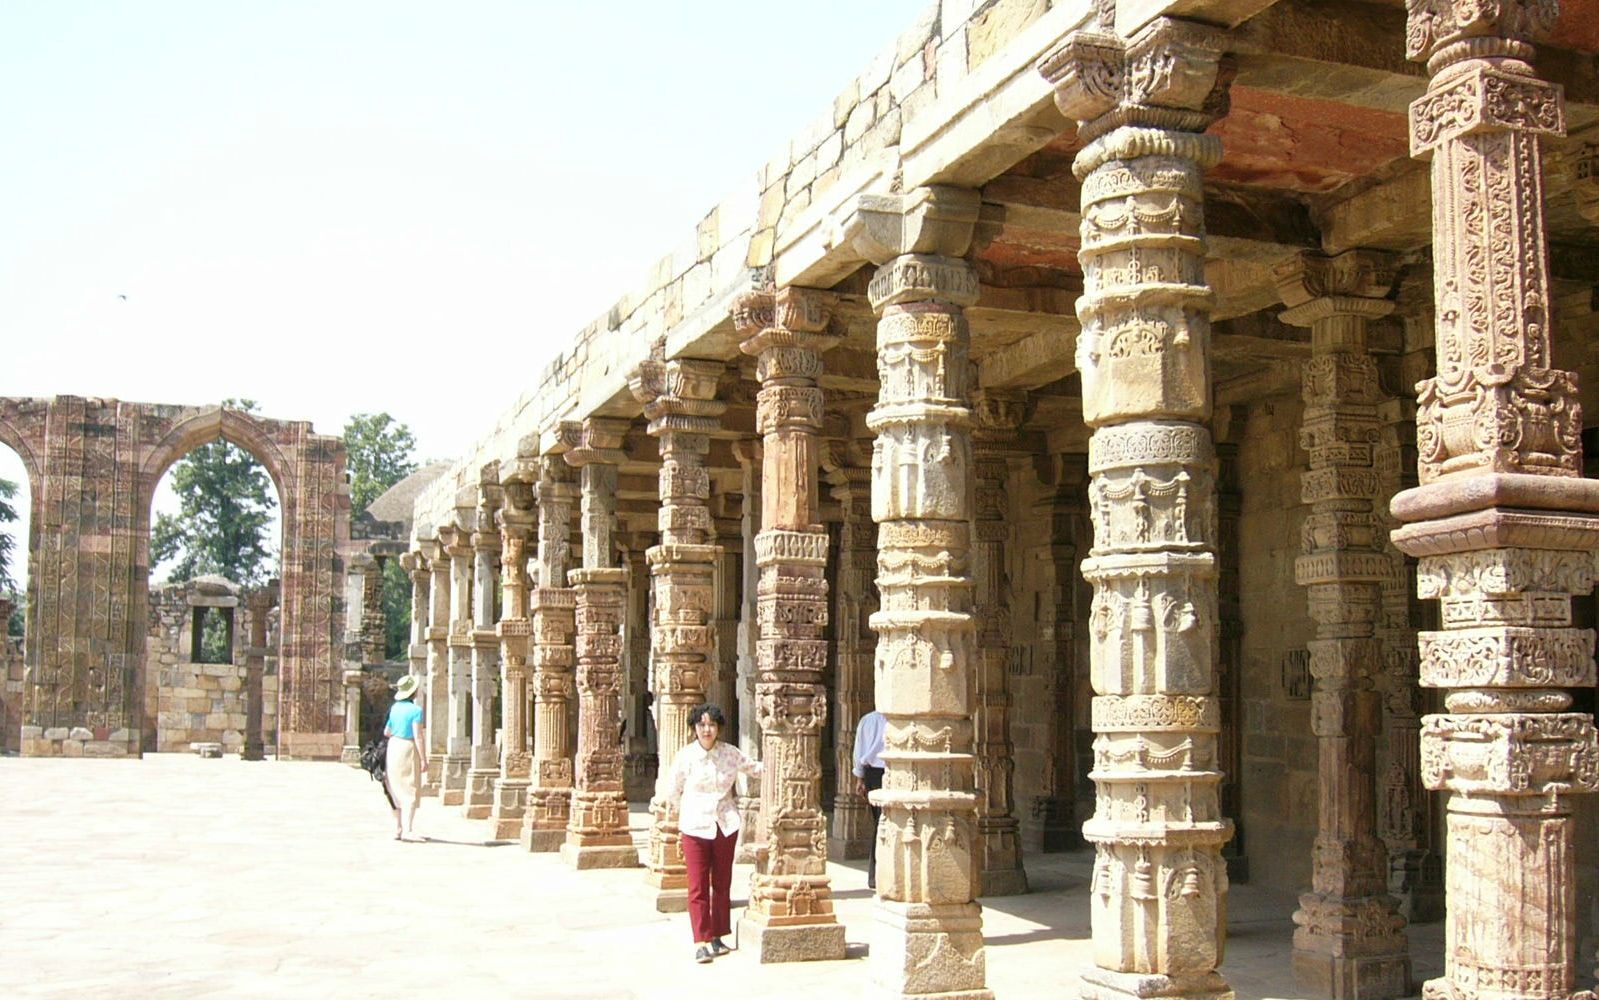 The Iron Pillar at Qutub Minar in Delhi